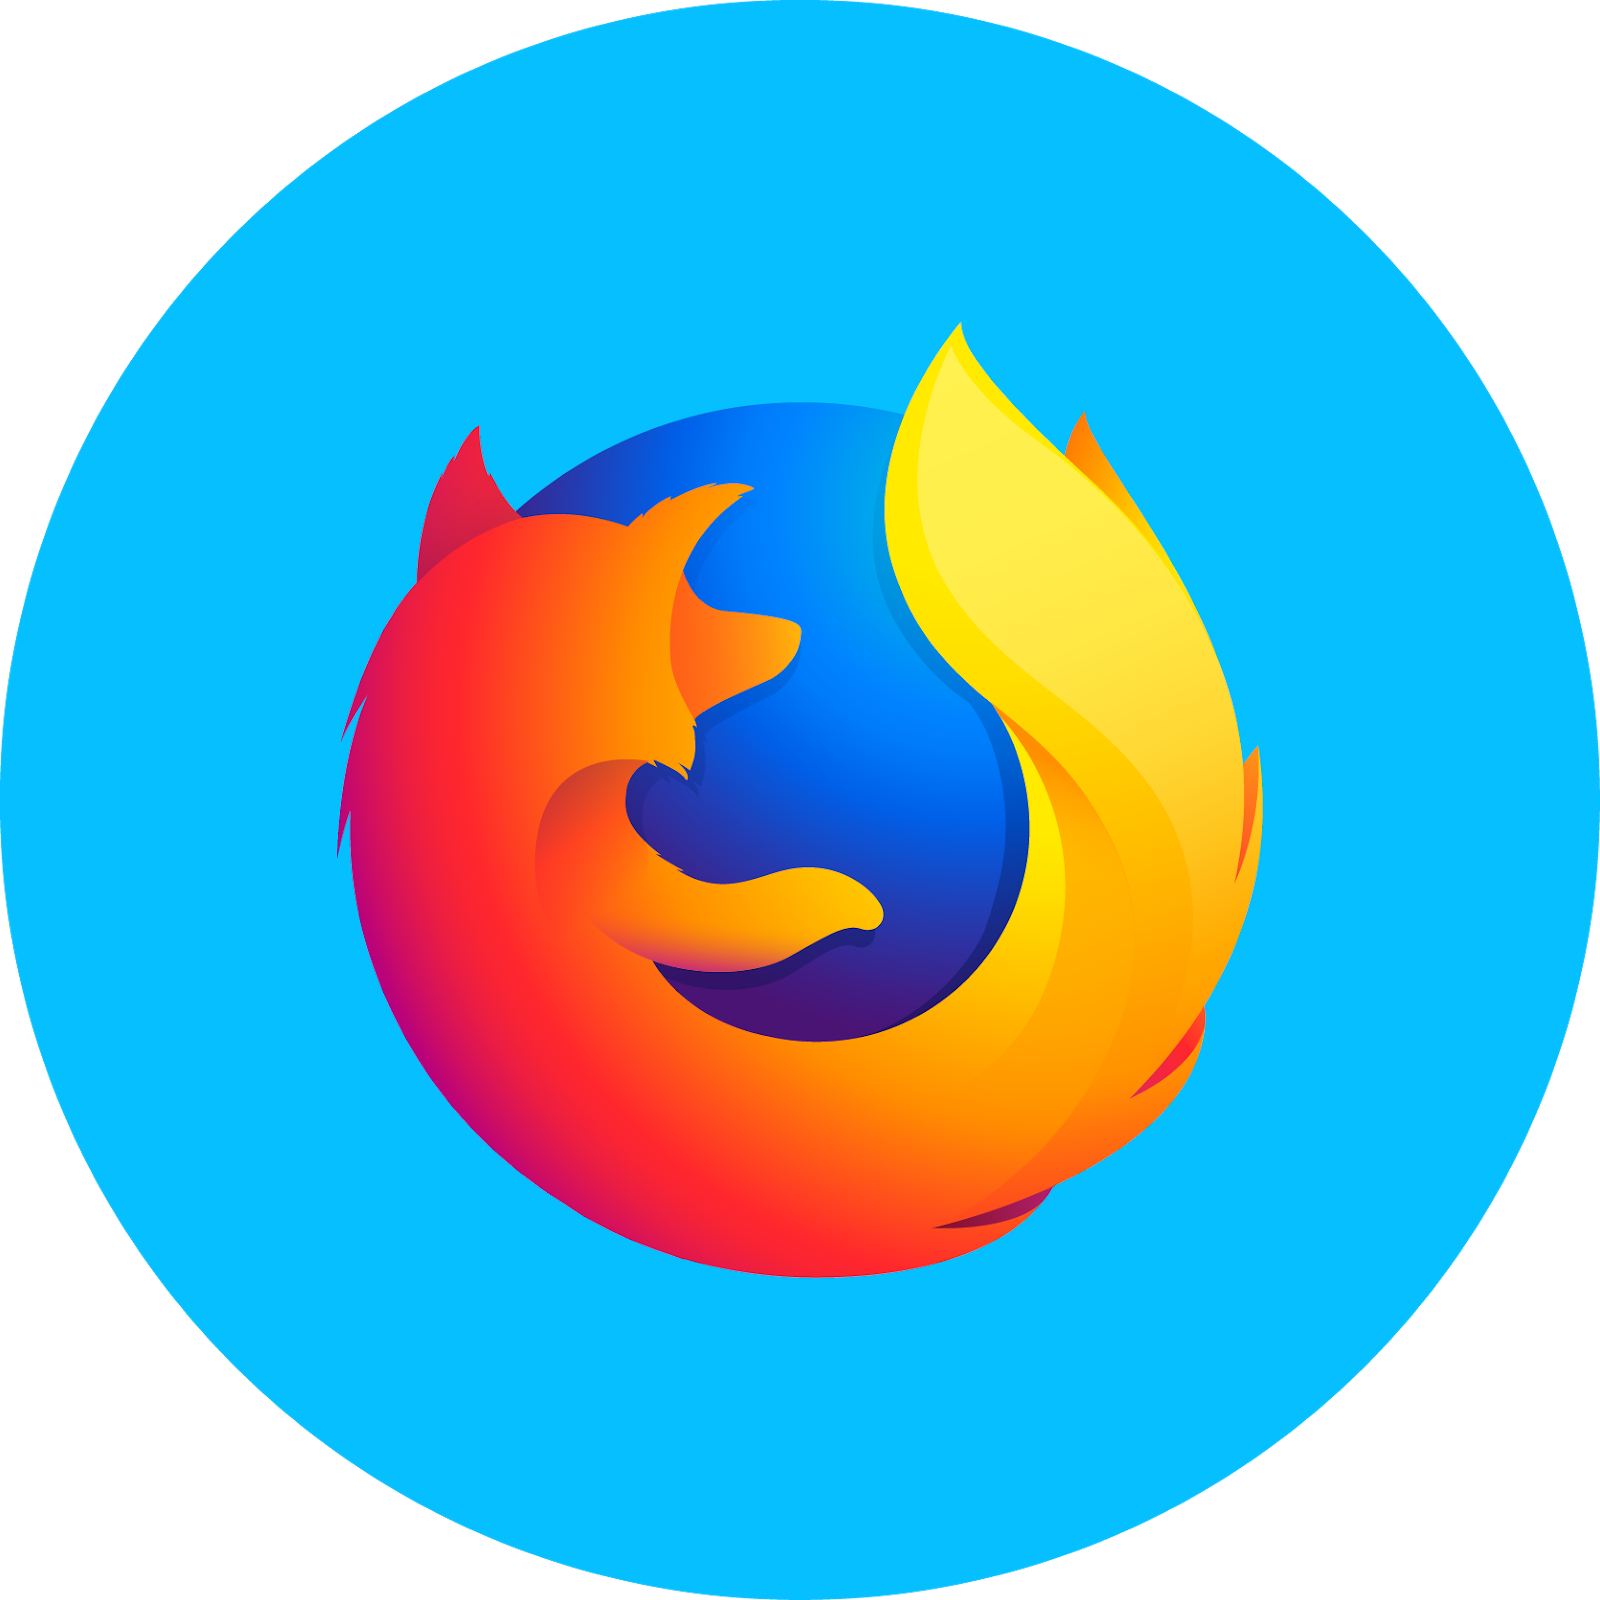 Ярлык firefox. Значок фаерфокс. Иконка Firefox PNG. Иконка мазила фаерфокс. Mozilla Firefox старый логотип.